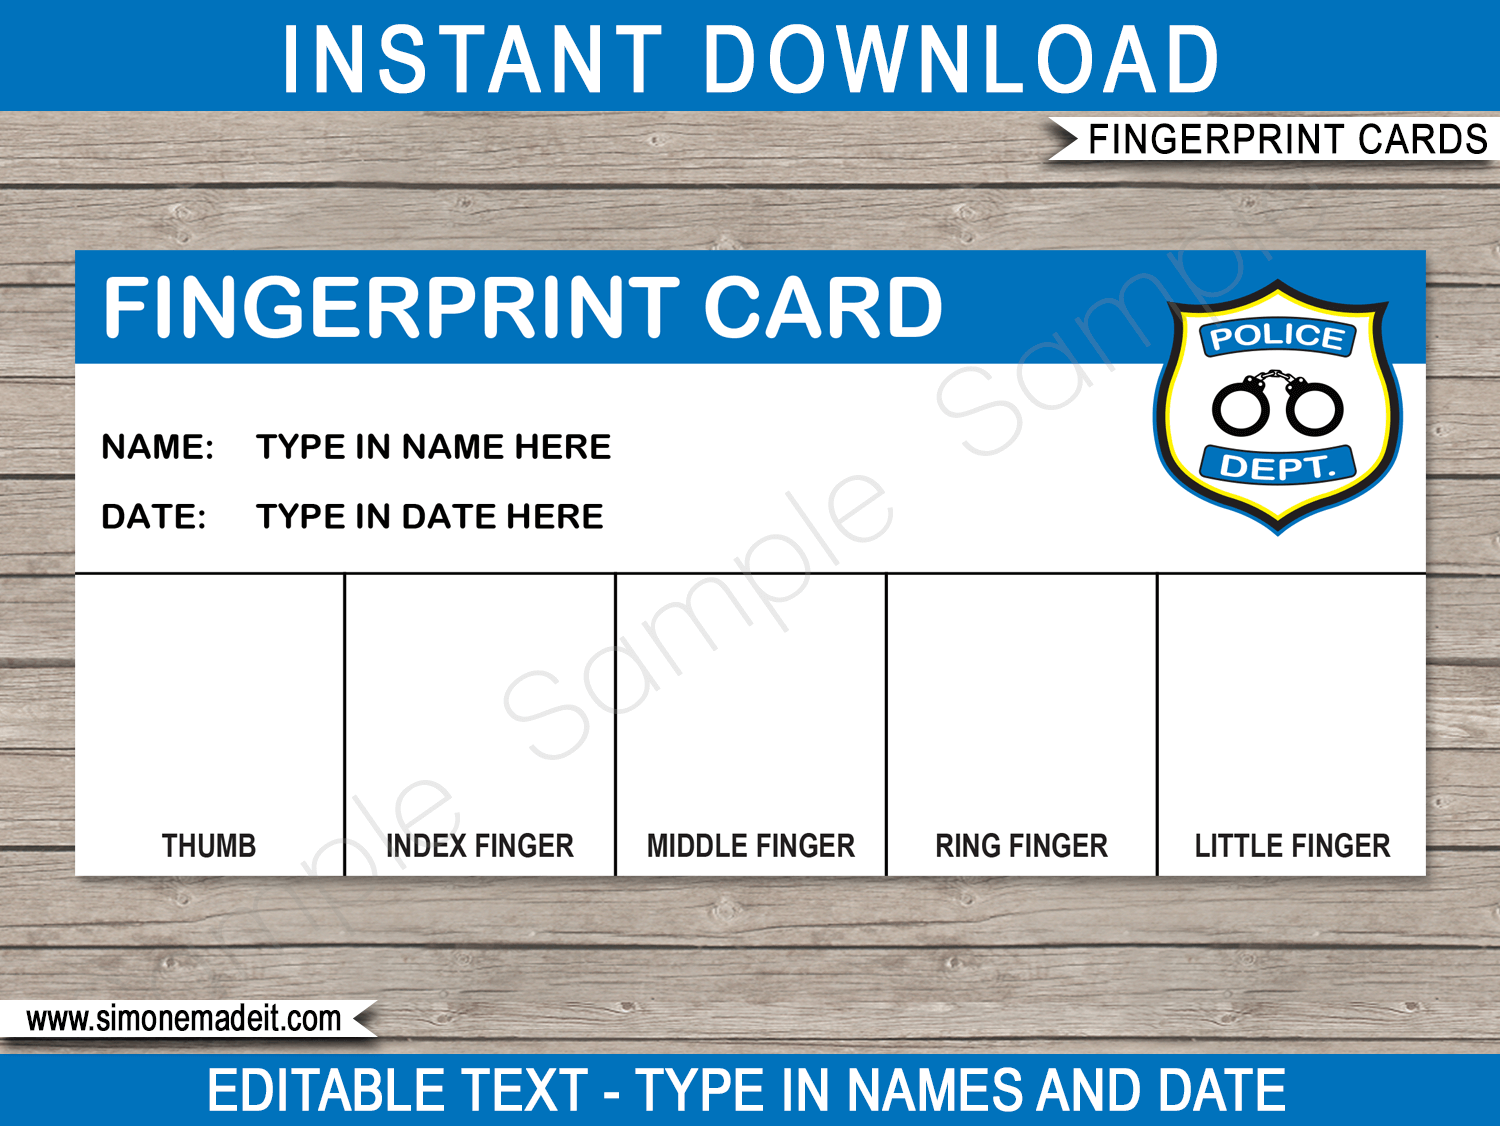 Police Party Fingerprinting Card | Fingerprints | Detective Theme | Birthday Party | Editable & Printable DIY template | INSTANT DOWNLOAD $3.00 via SIMONEmadeit.com